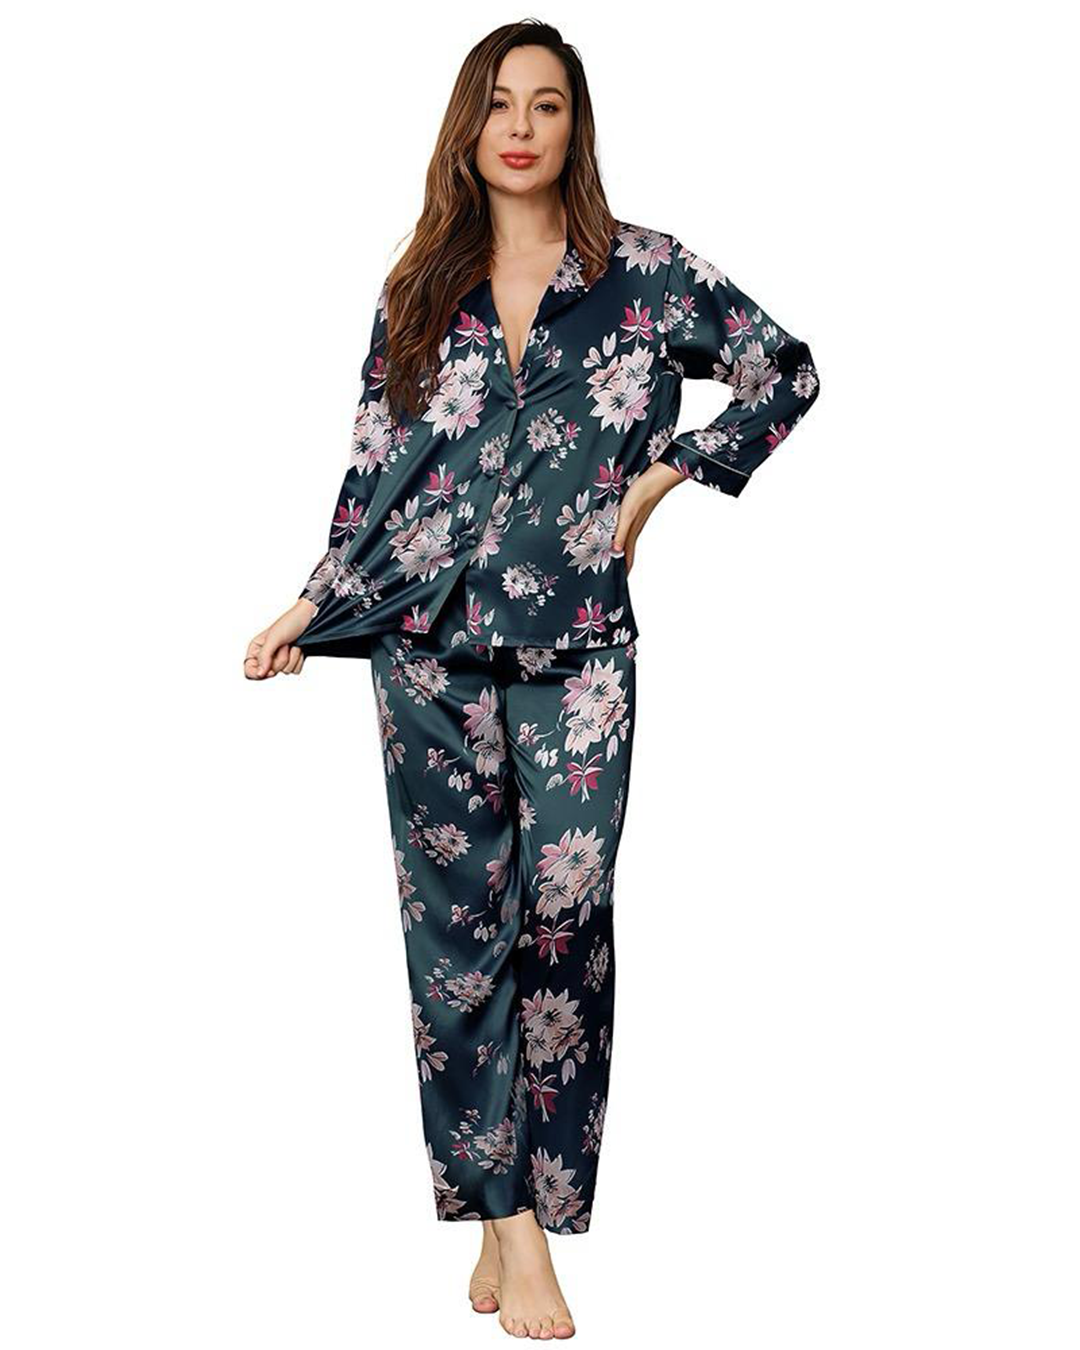 Women's pajamas with satin buttons, rosewood